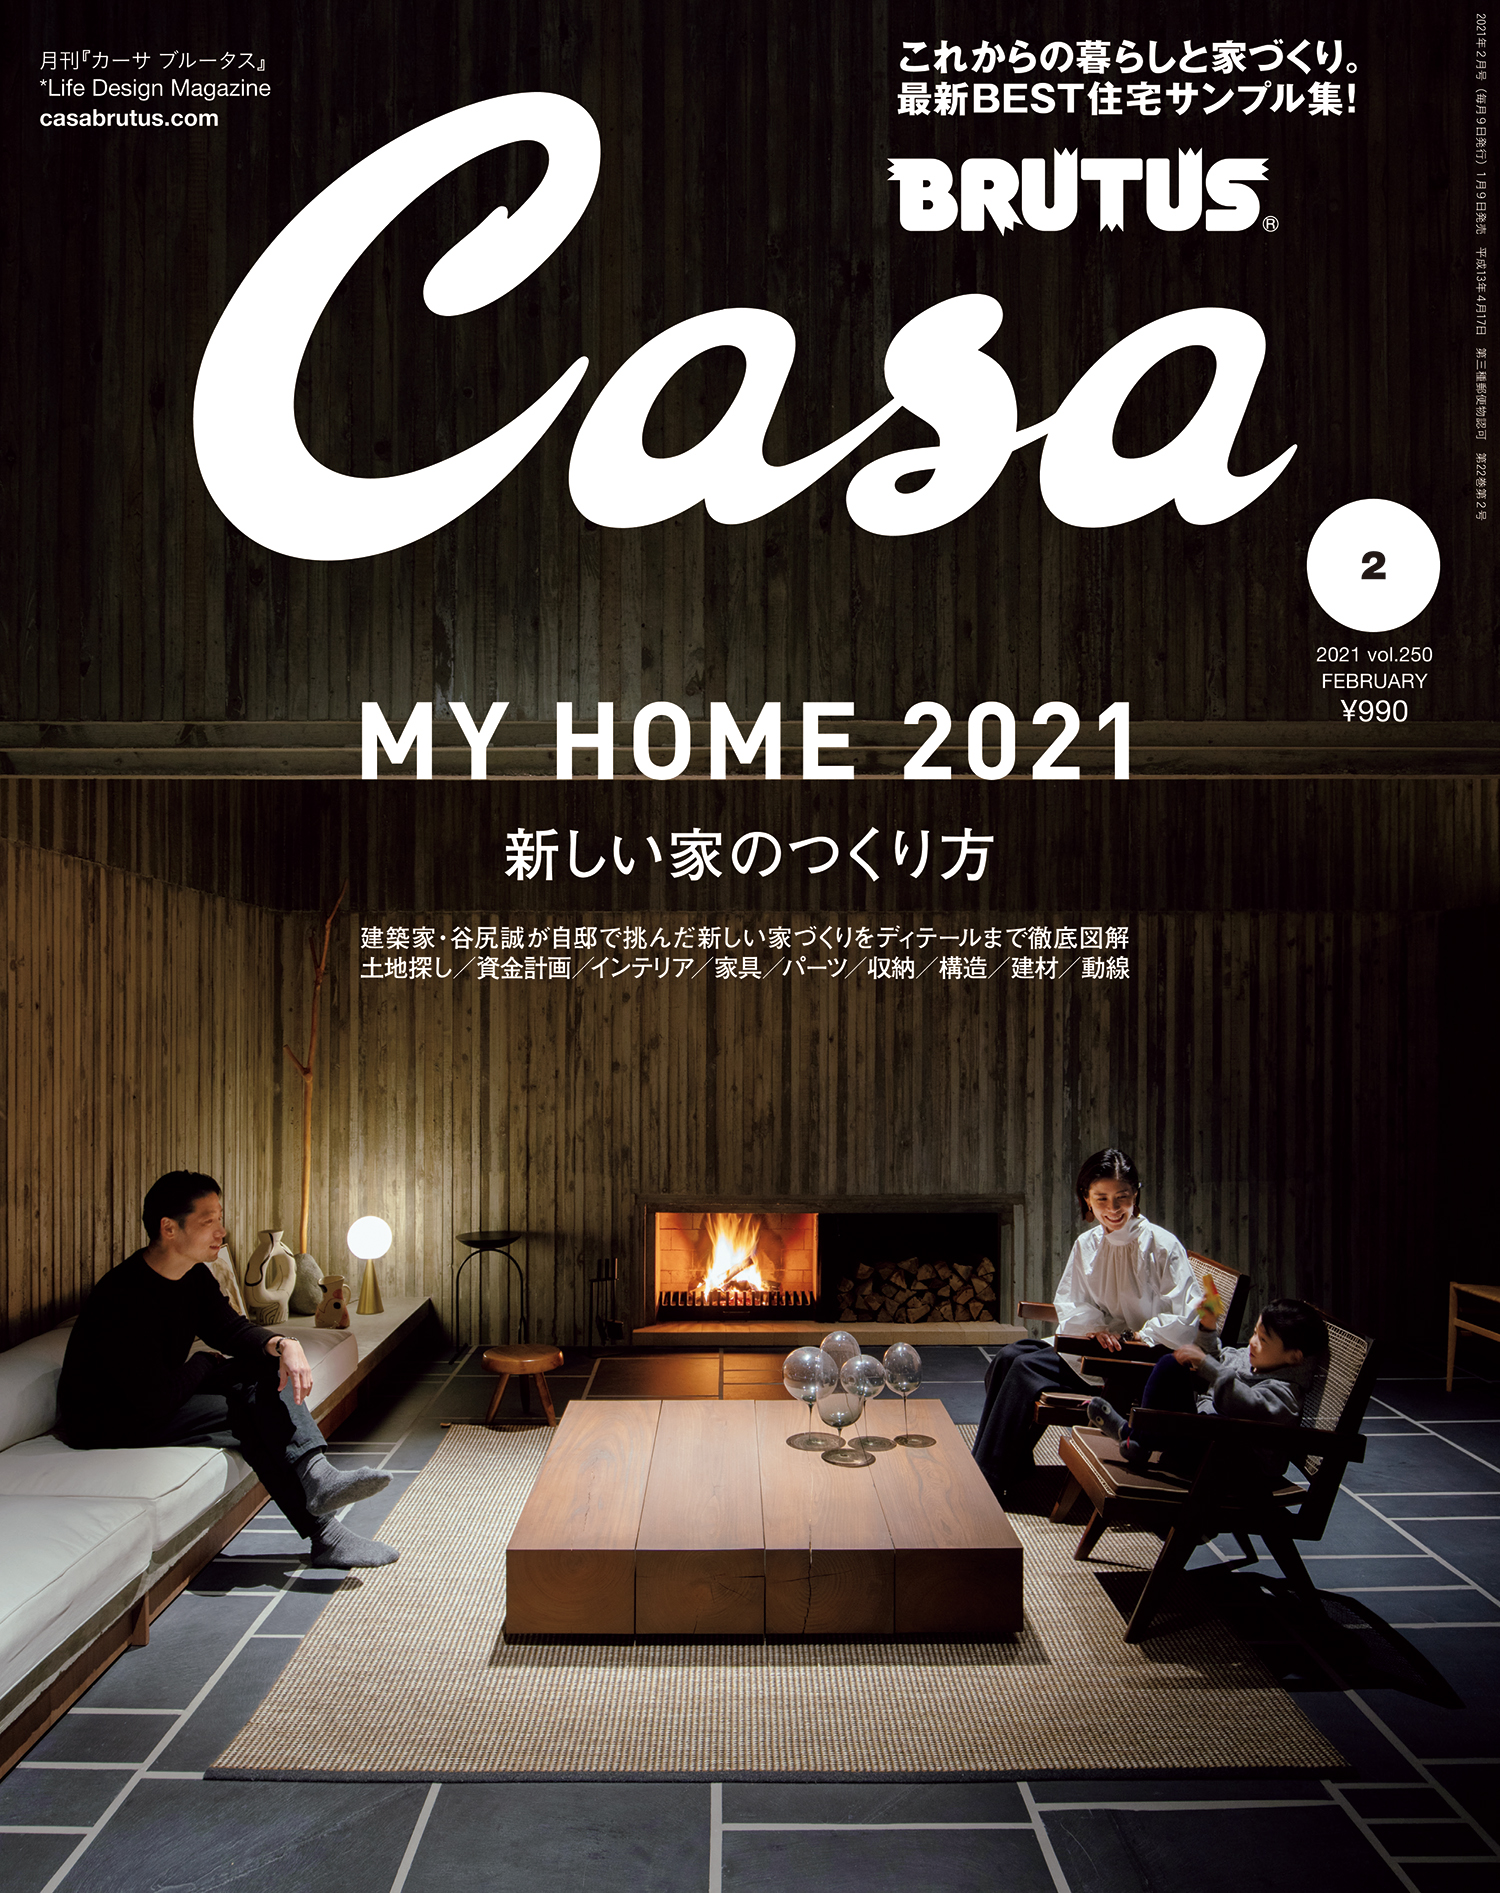 Casa BRUTUS(カーサ ブルータス) 2021年 2月号 [MY HOME 2021 新しい家